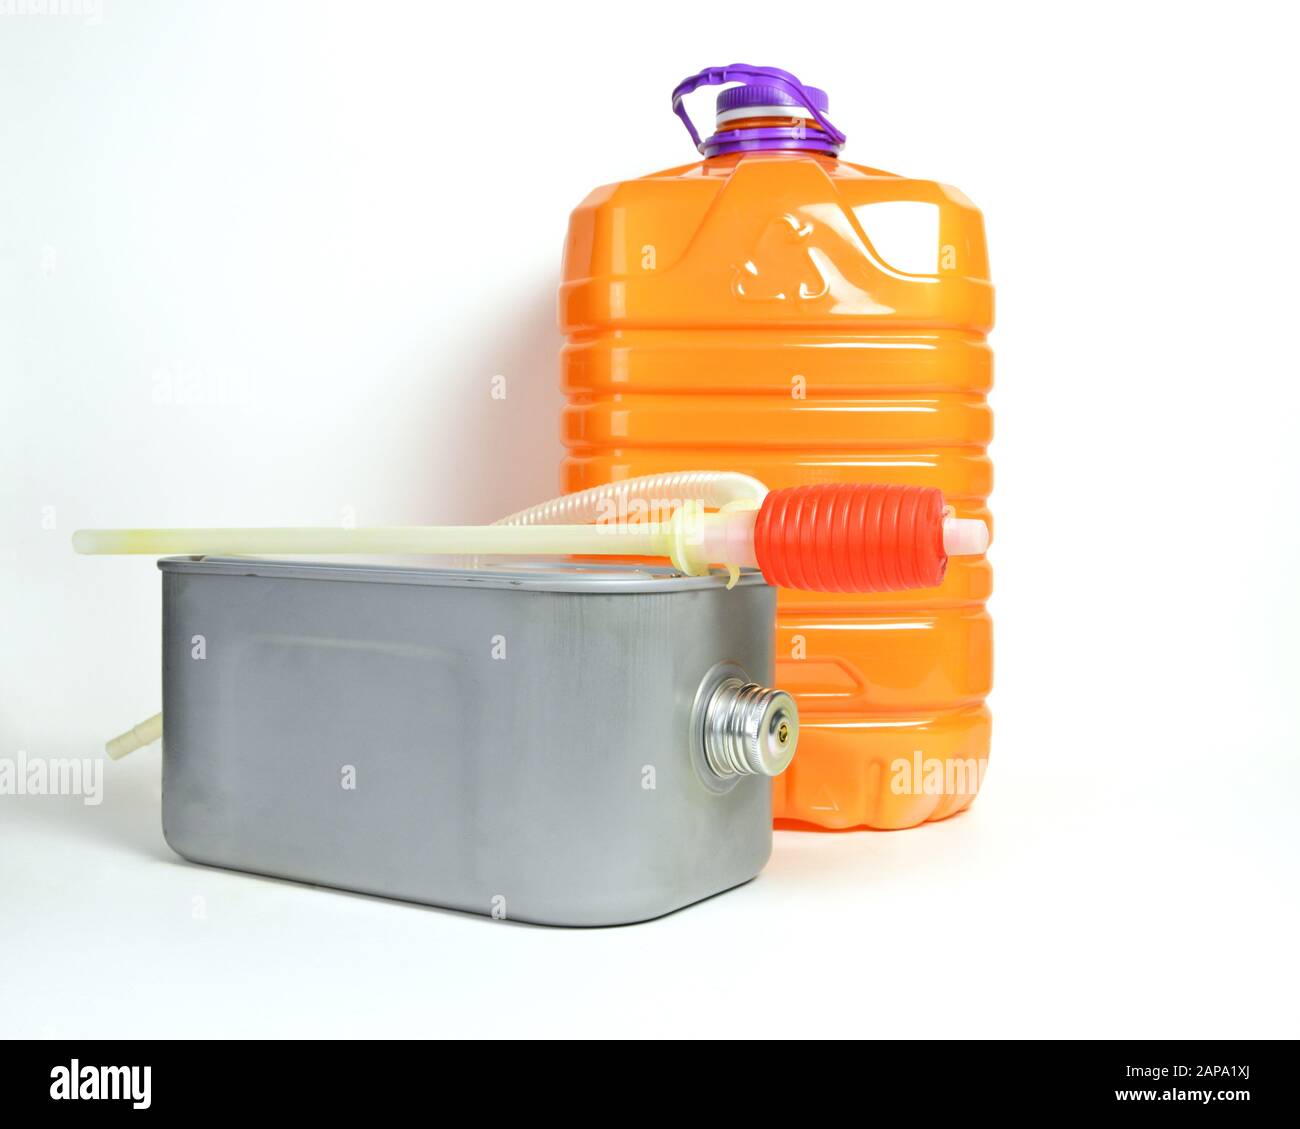 a tank with a can of kerozene for a kerosene heater Stock Photo